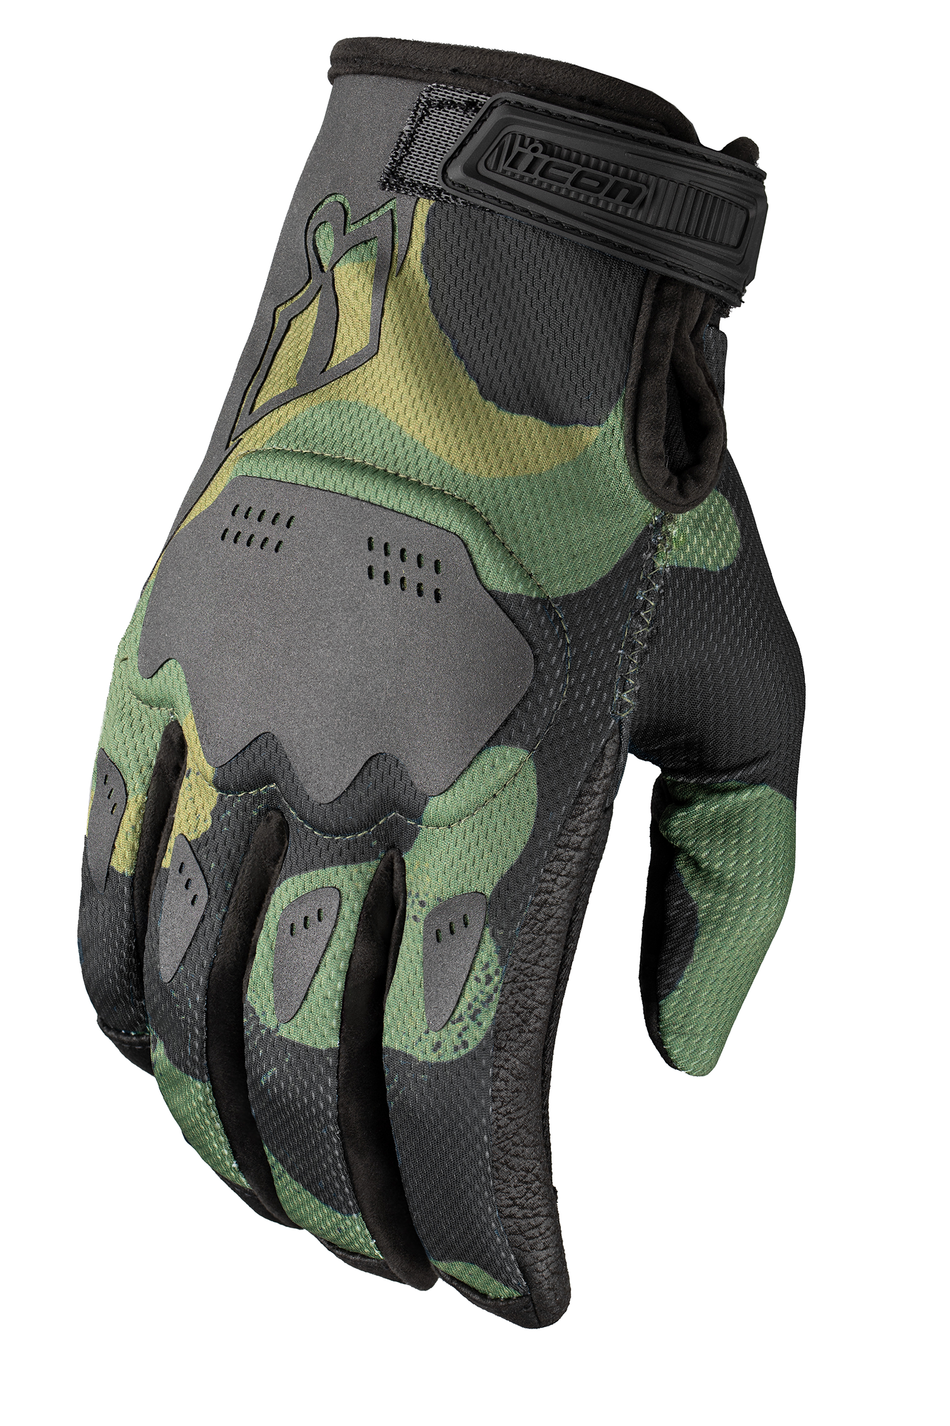 ICON Hooligan Magnacross™ Gloves - Camo Green - Small 3301-4821